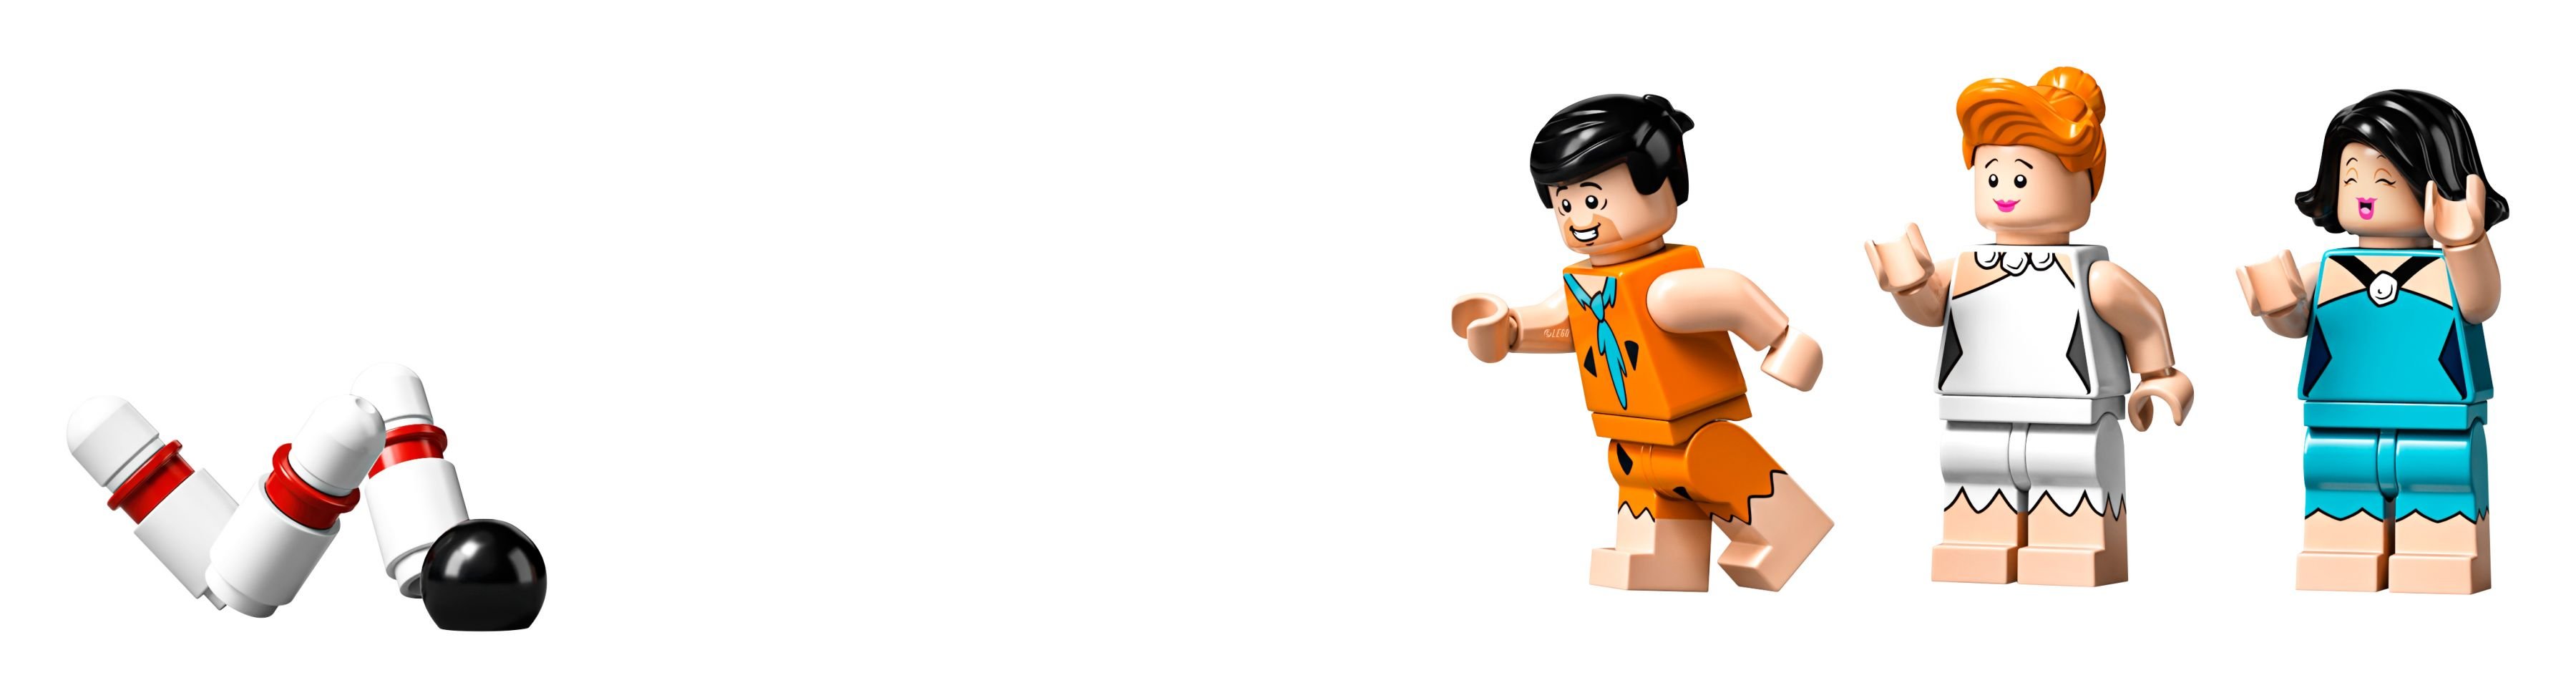 LEGO Ideas 21316 The Flintstones - Familie Feuerstein LEGO_21316_alt12.jpg